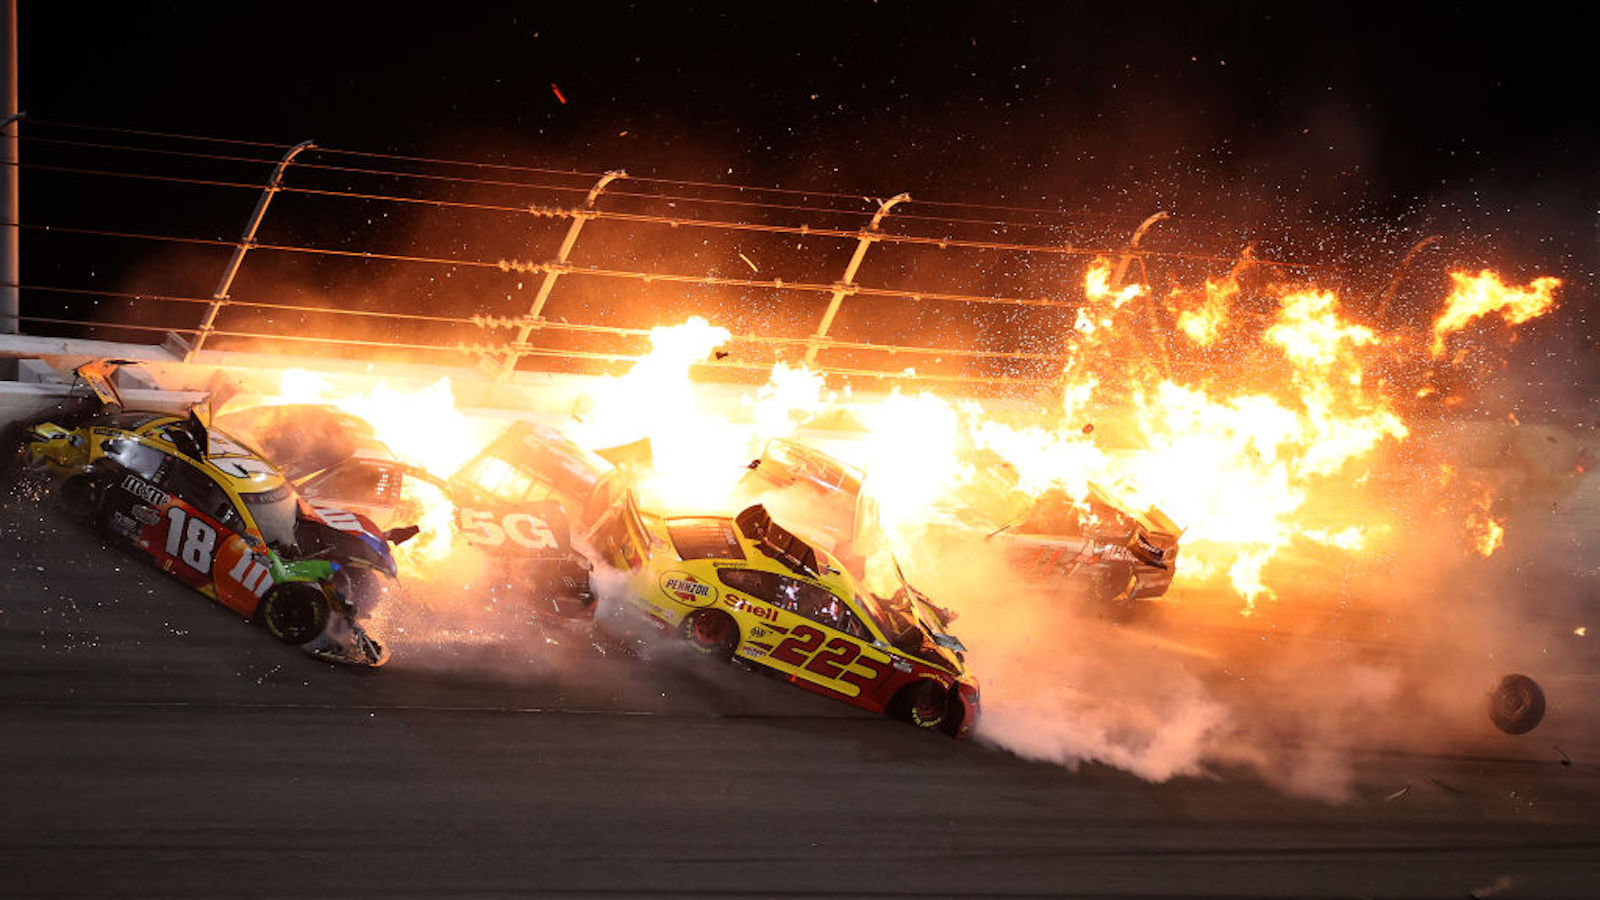 A fiery crash at the Daytona 500